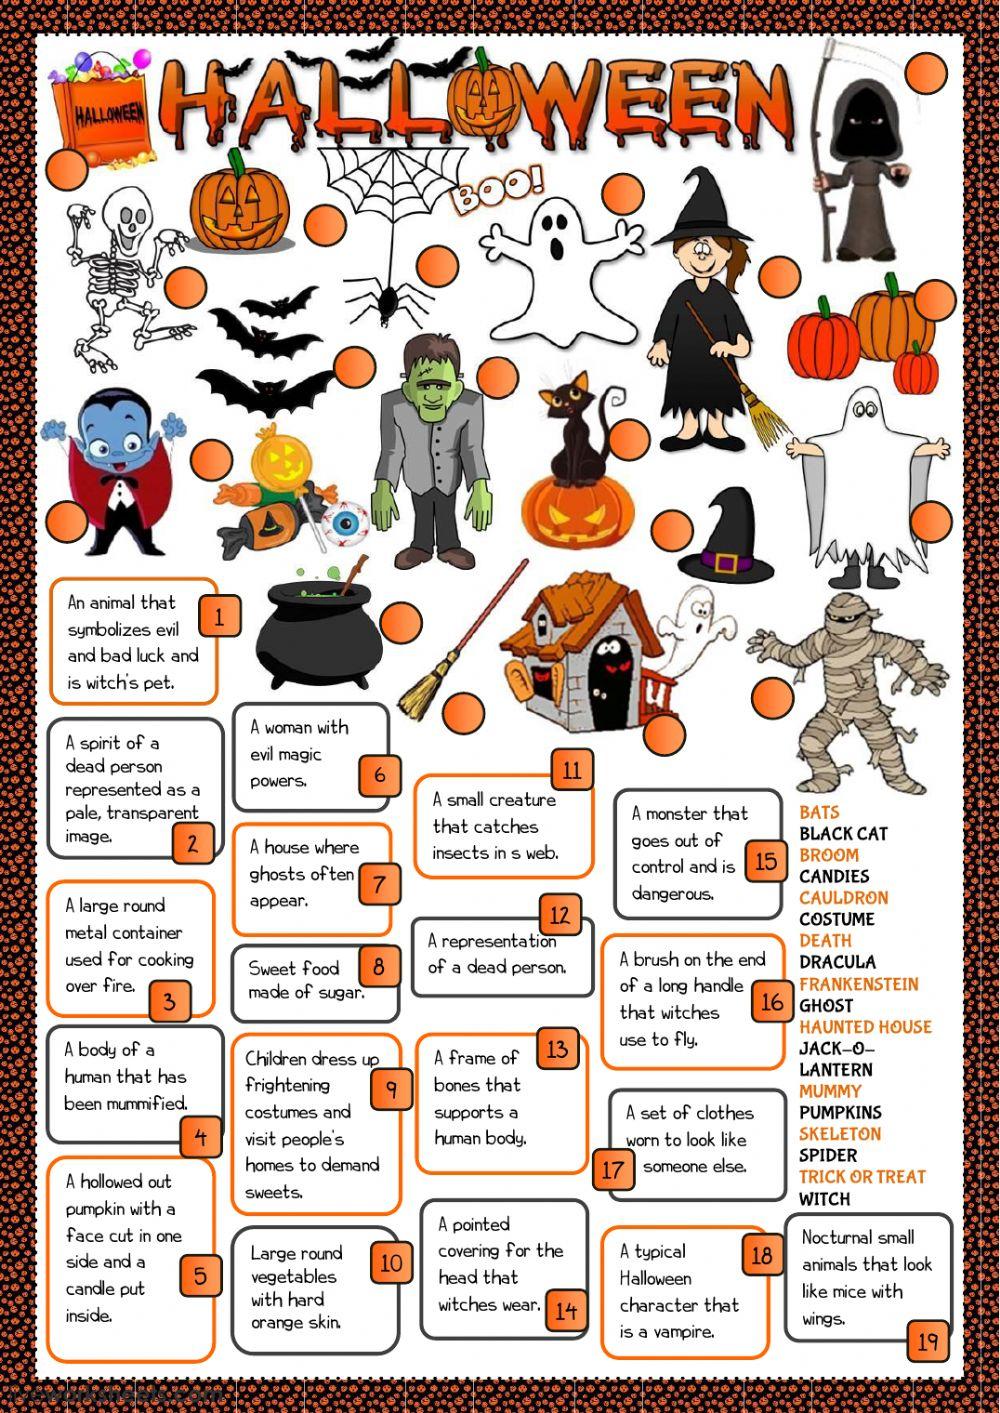 Halloween - definitions